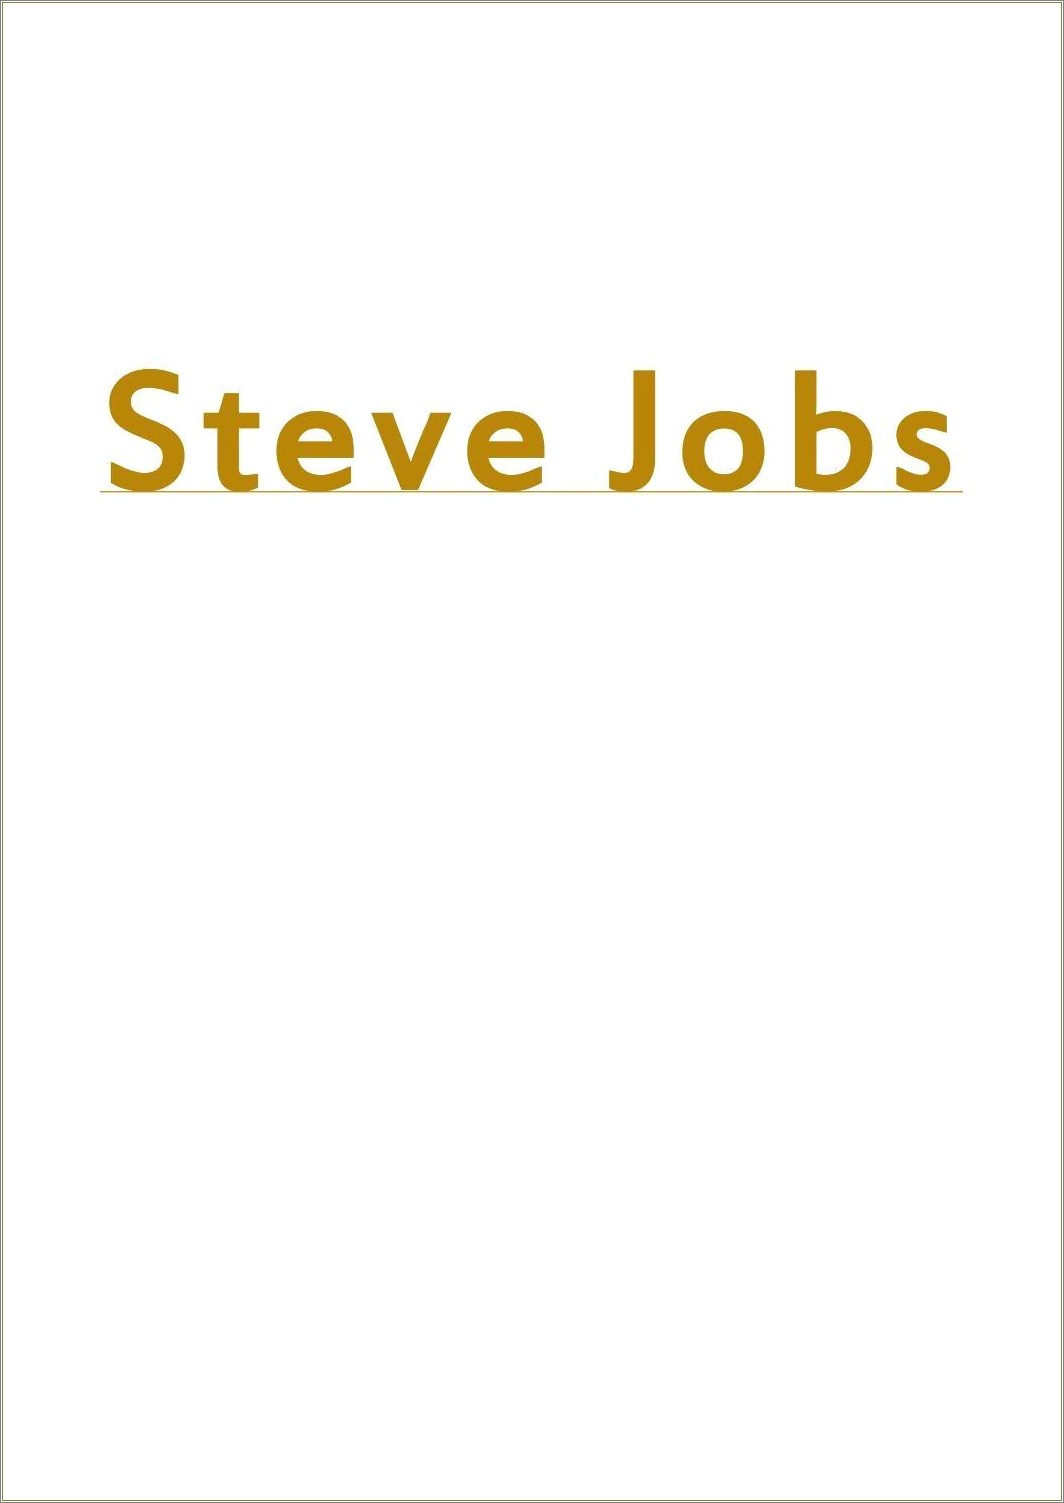 Biografia De Steve Jobs Resumida Wikipedia